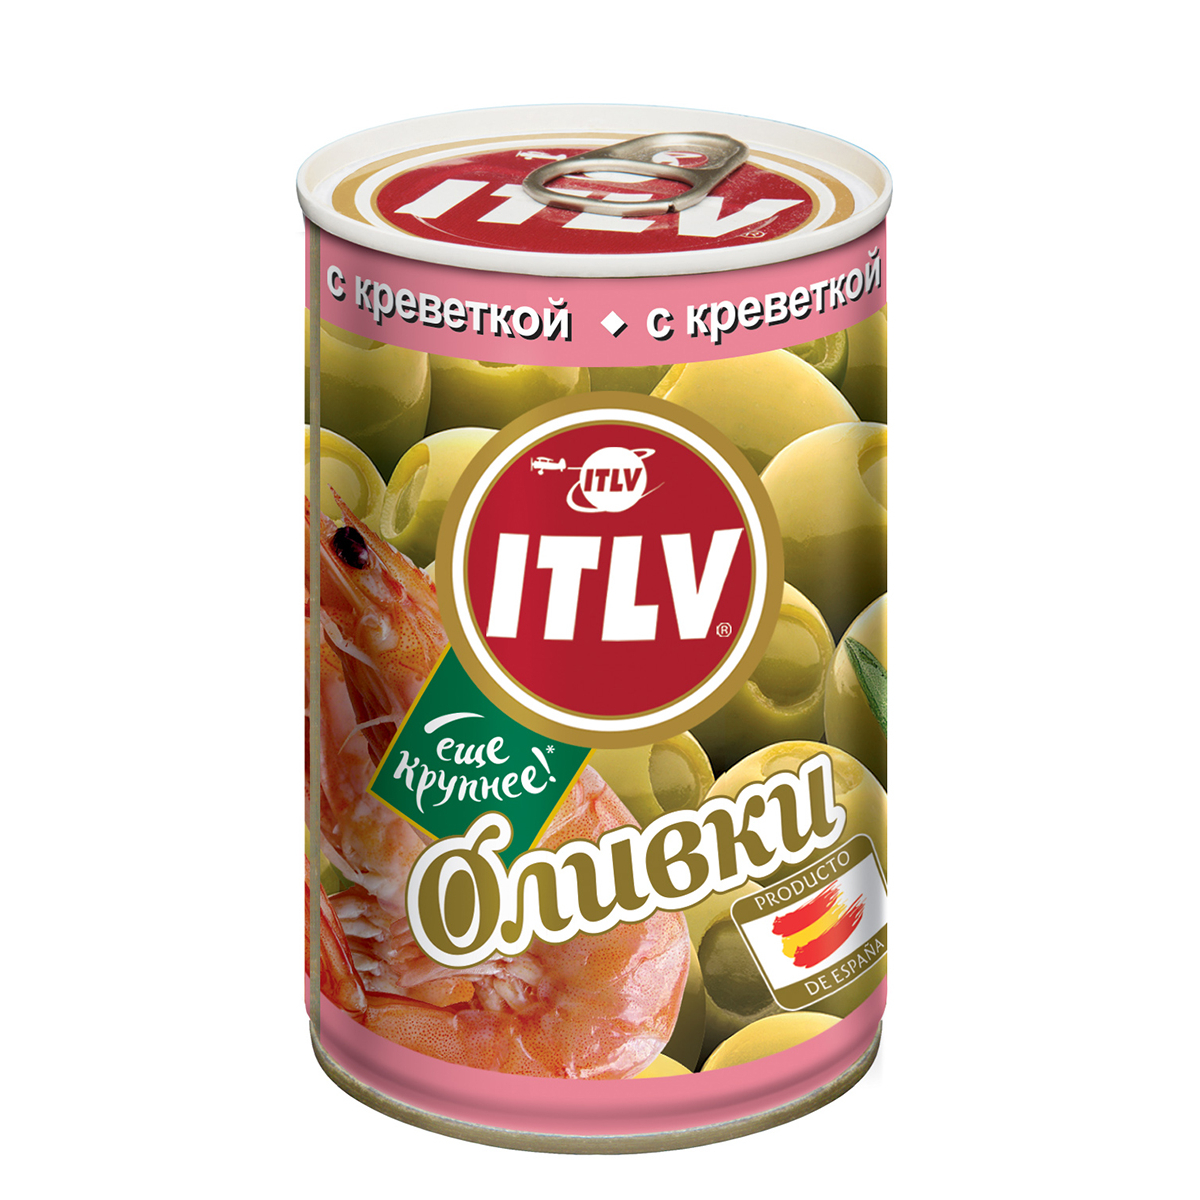 Оливки ITLV с креветками 314 мл маэстро де олива оливки с креветками маэсто де оливо